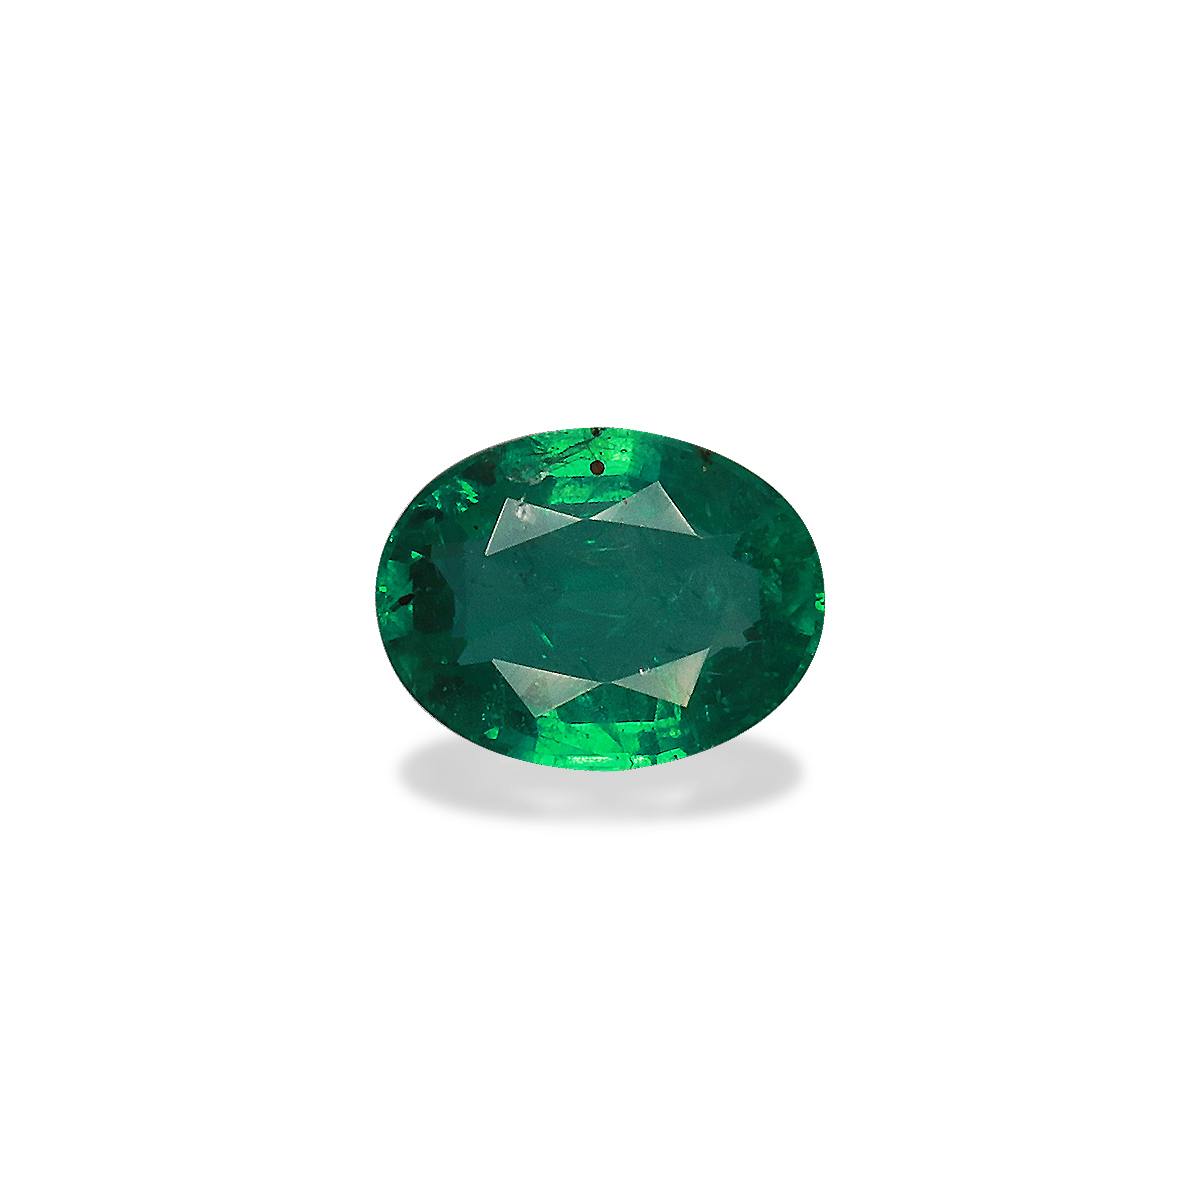 Green Zambian Emerald 1.25ct - 8x6mm (PG0001-11)